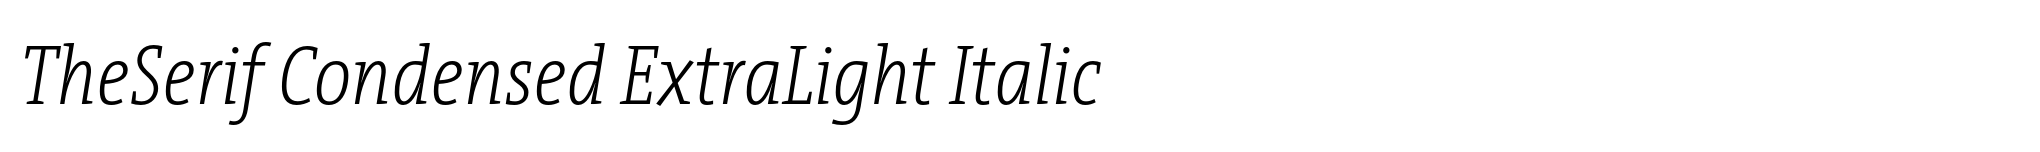 TheSerif Condensed ExtraLight Italic image